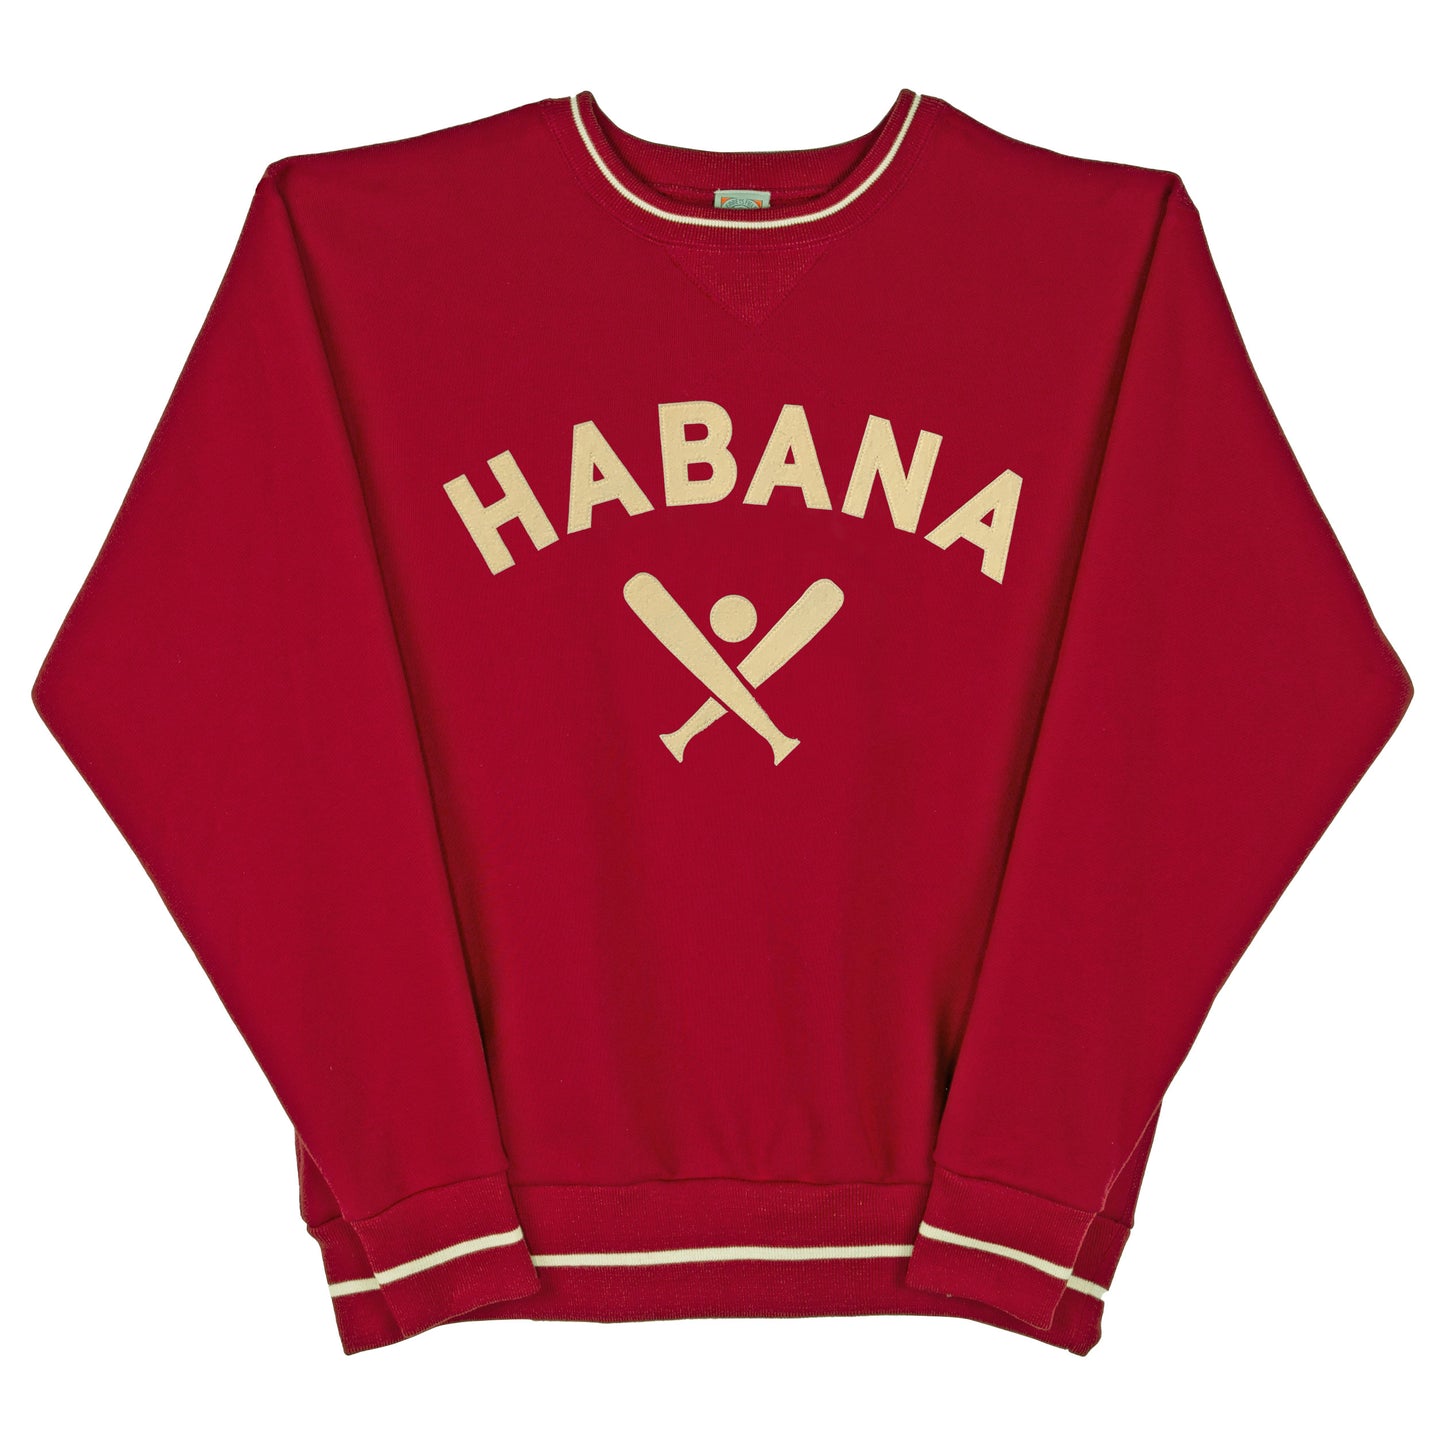 Habana Vintage Crewneck Sweatshirt